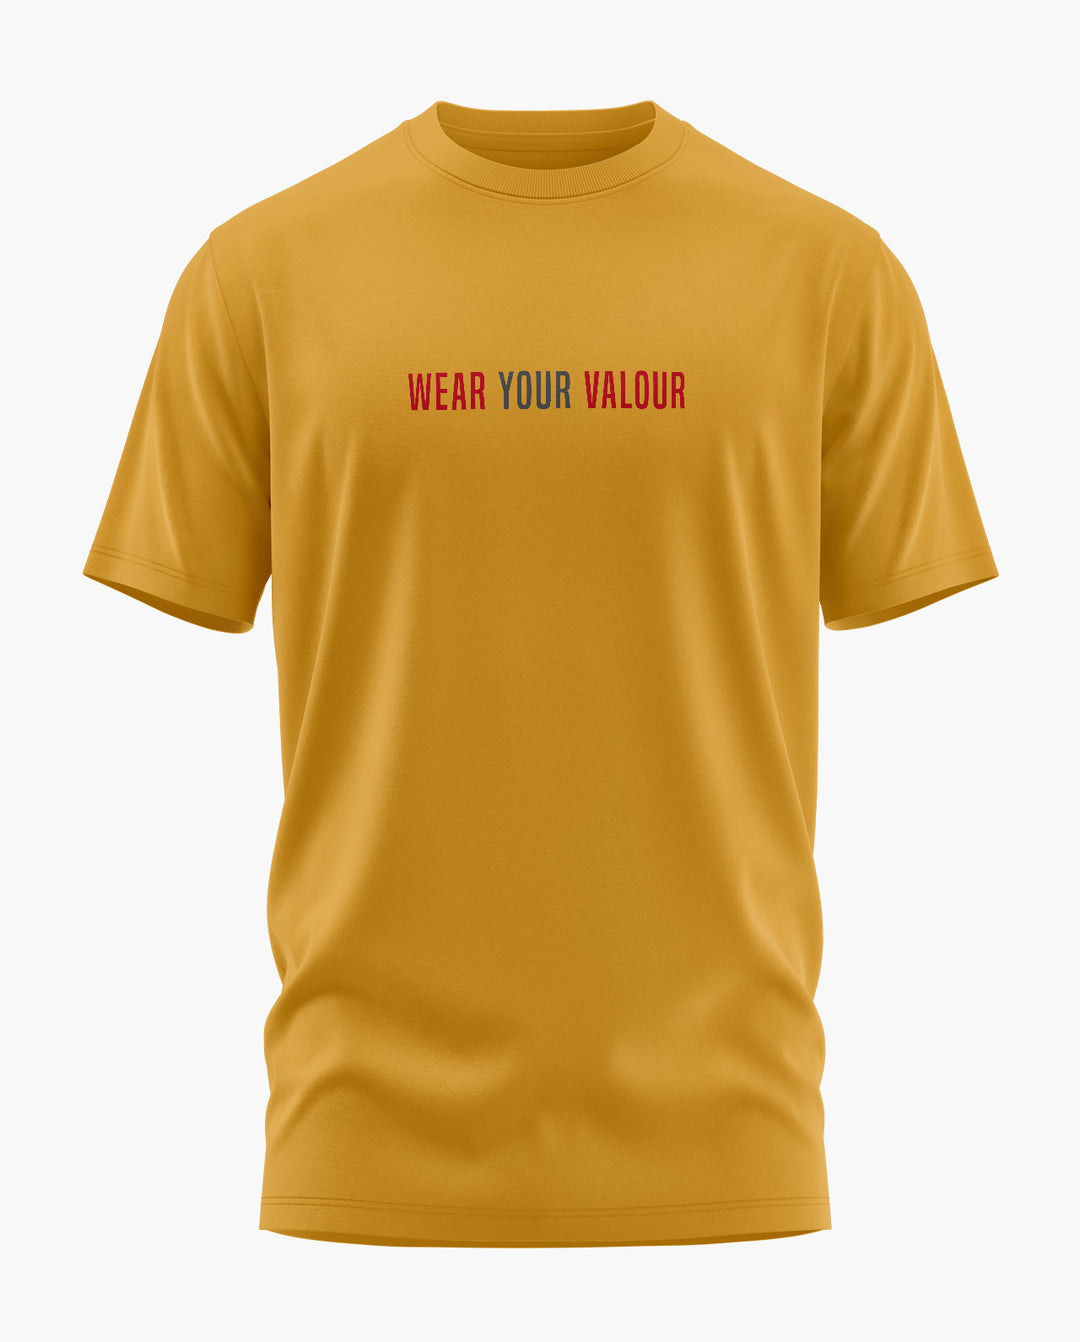 WEAR YOUR STRIPE T-Shirt